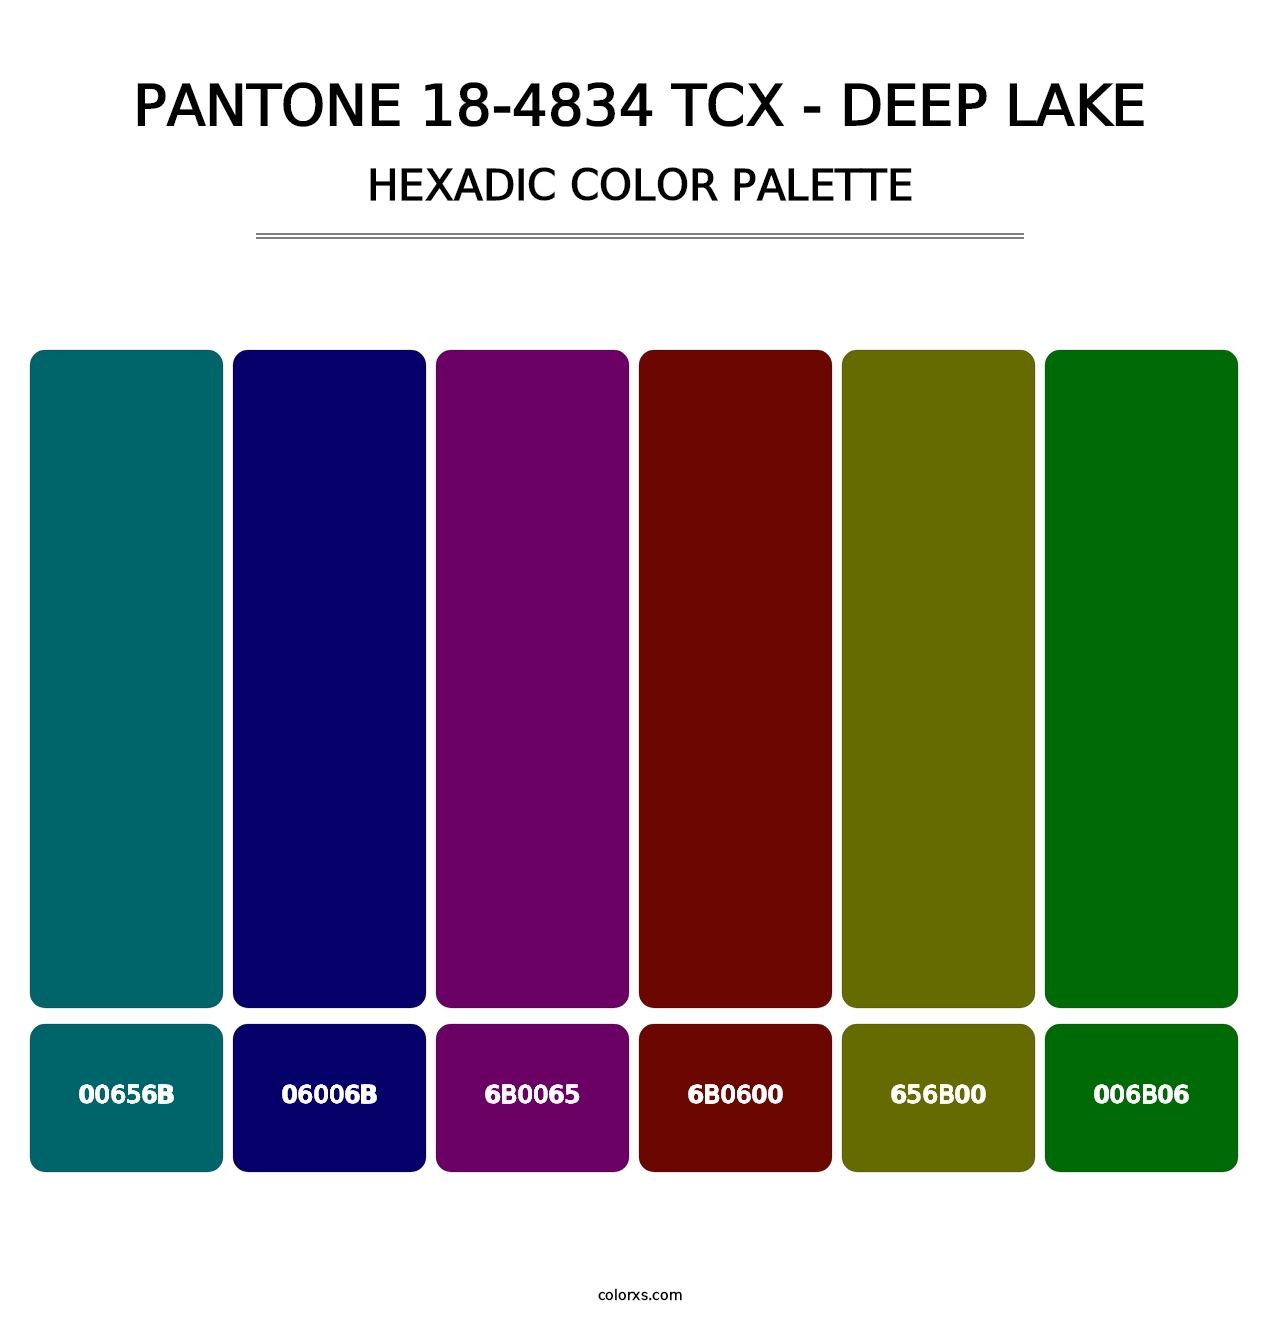 PANTONE 18-4834 TCX - Deep Lake - Hexadic Color Palette